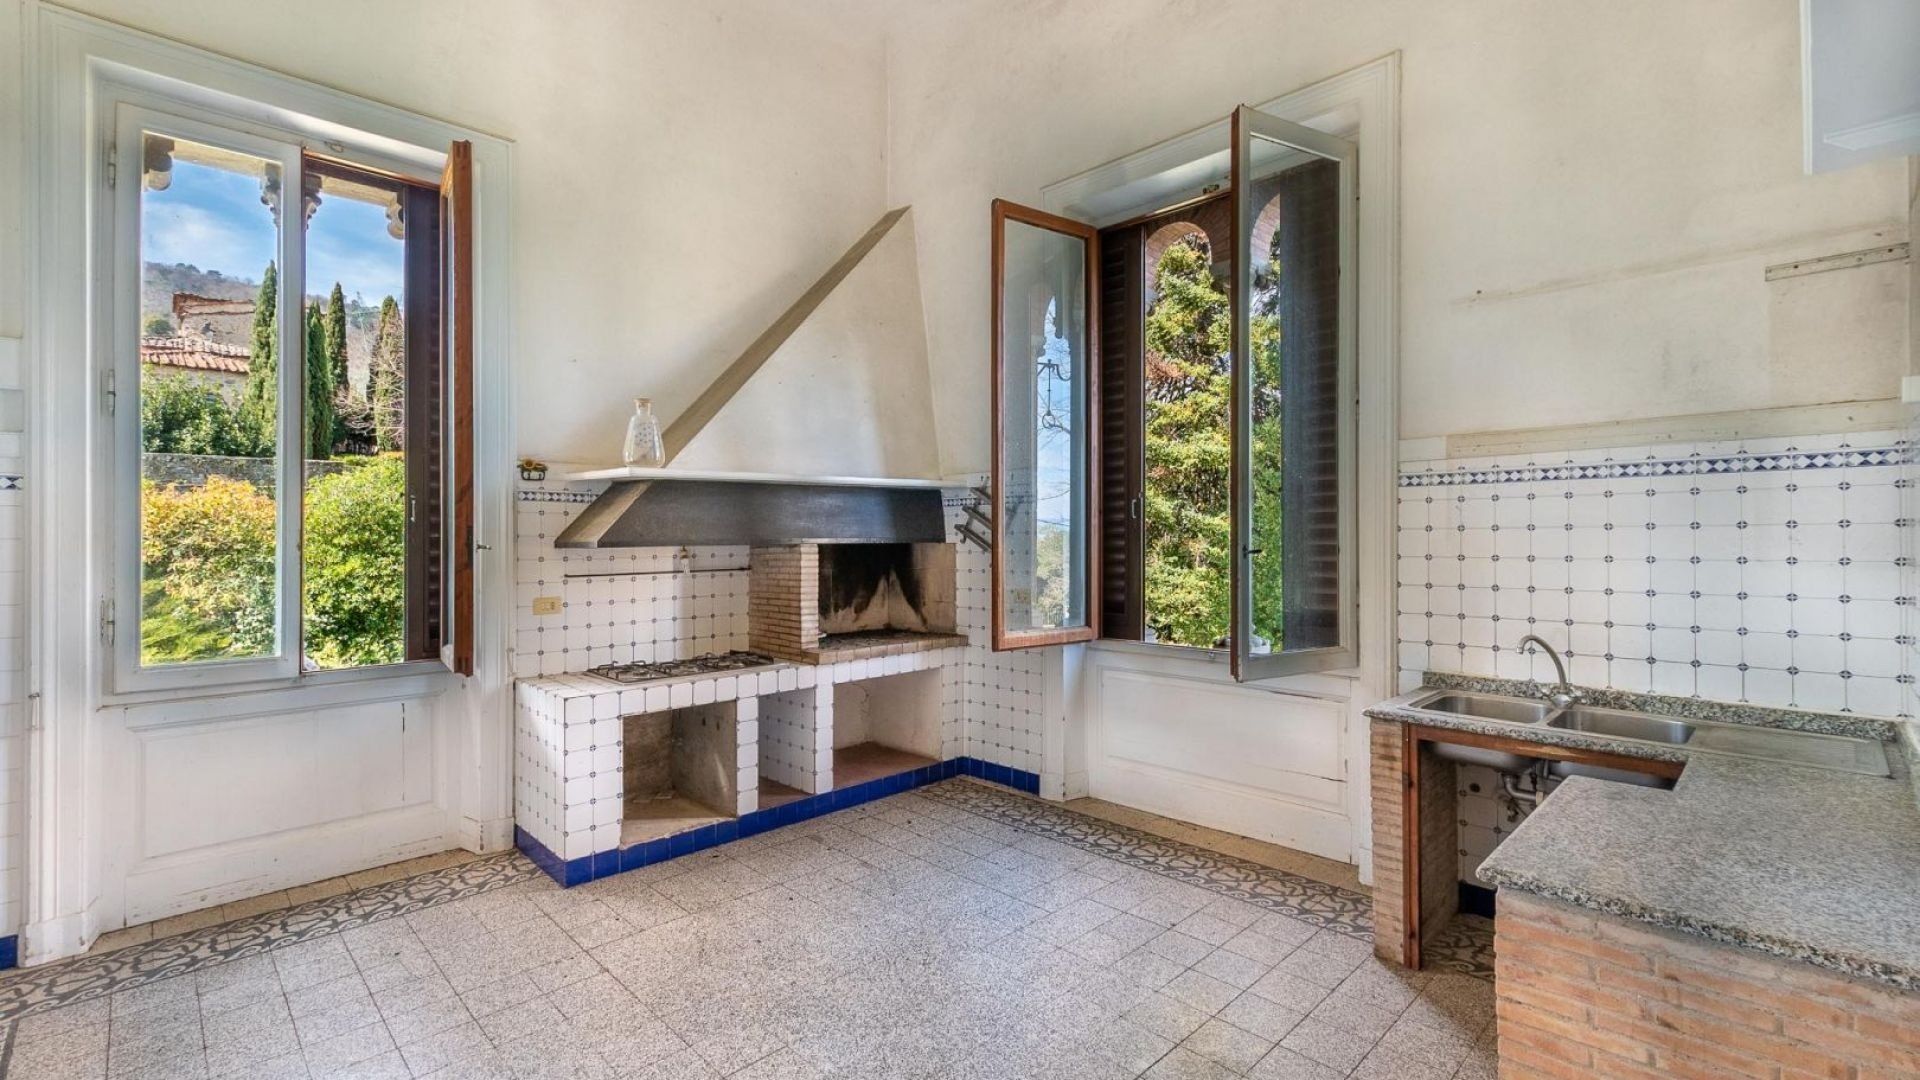 Francis York Tuscan Art Nouveau Villa and 320-Acre Estate in Chianti, Italy  00019.jpg